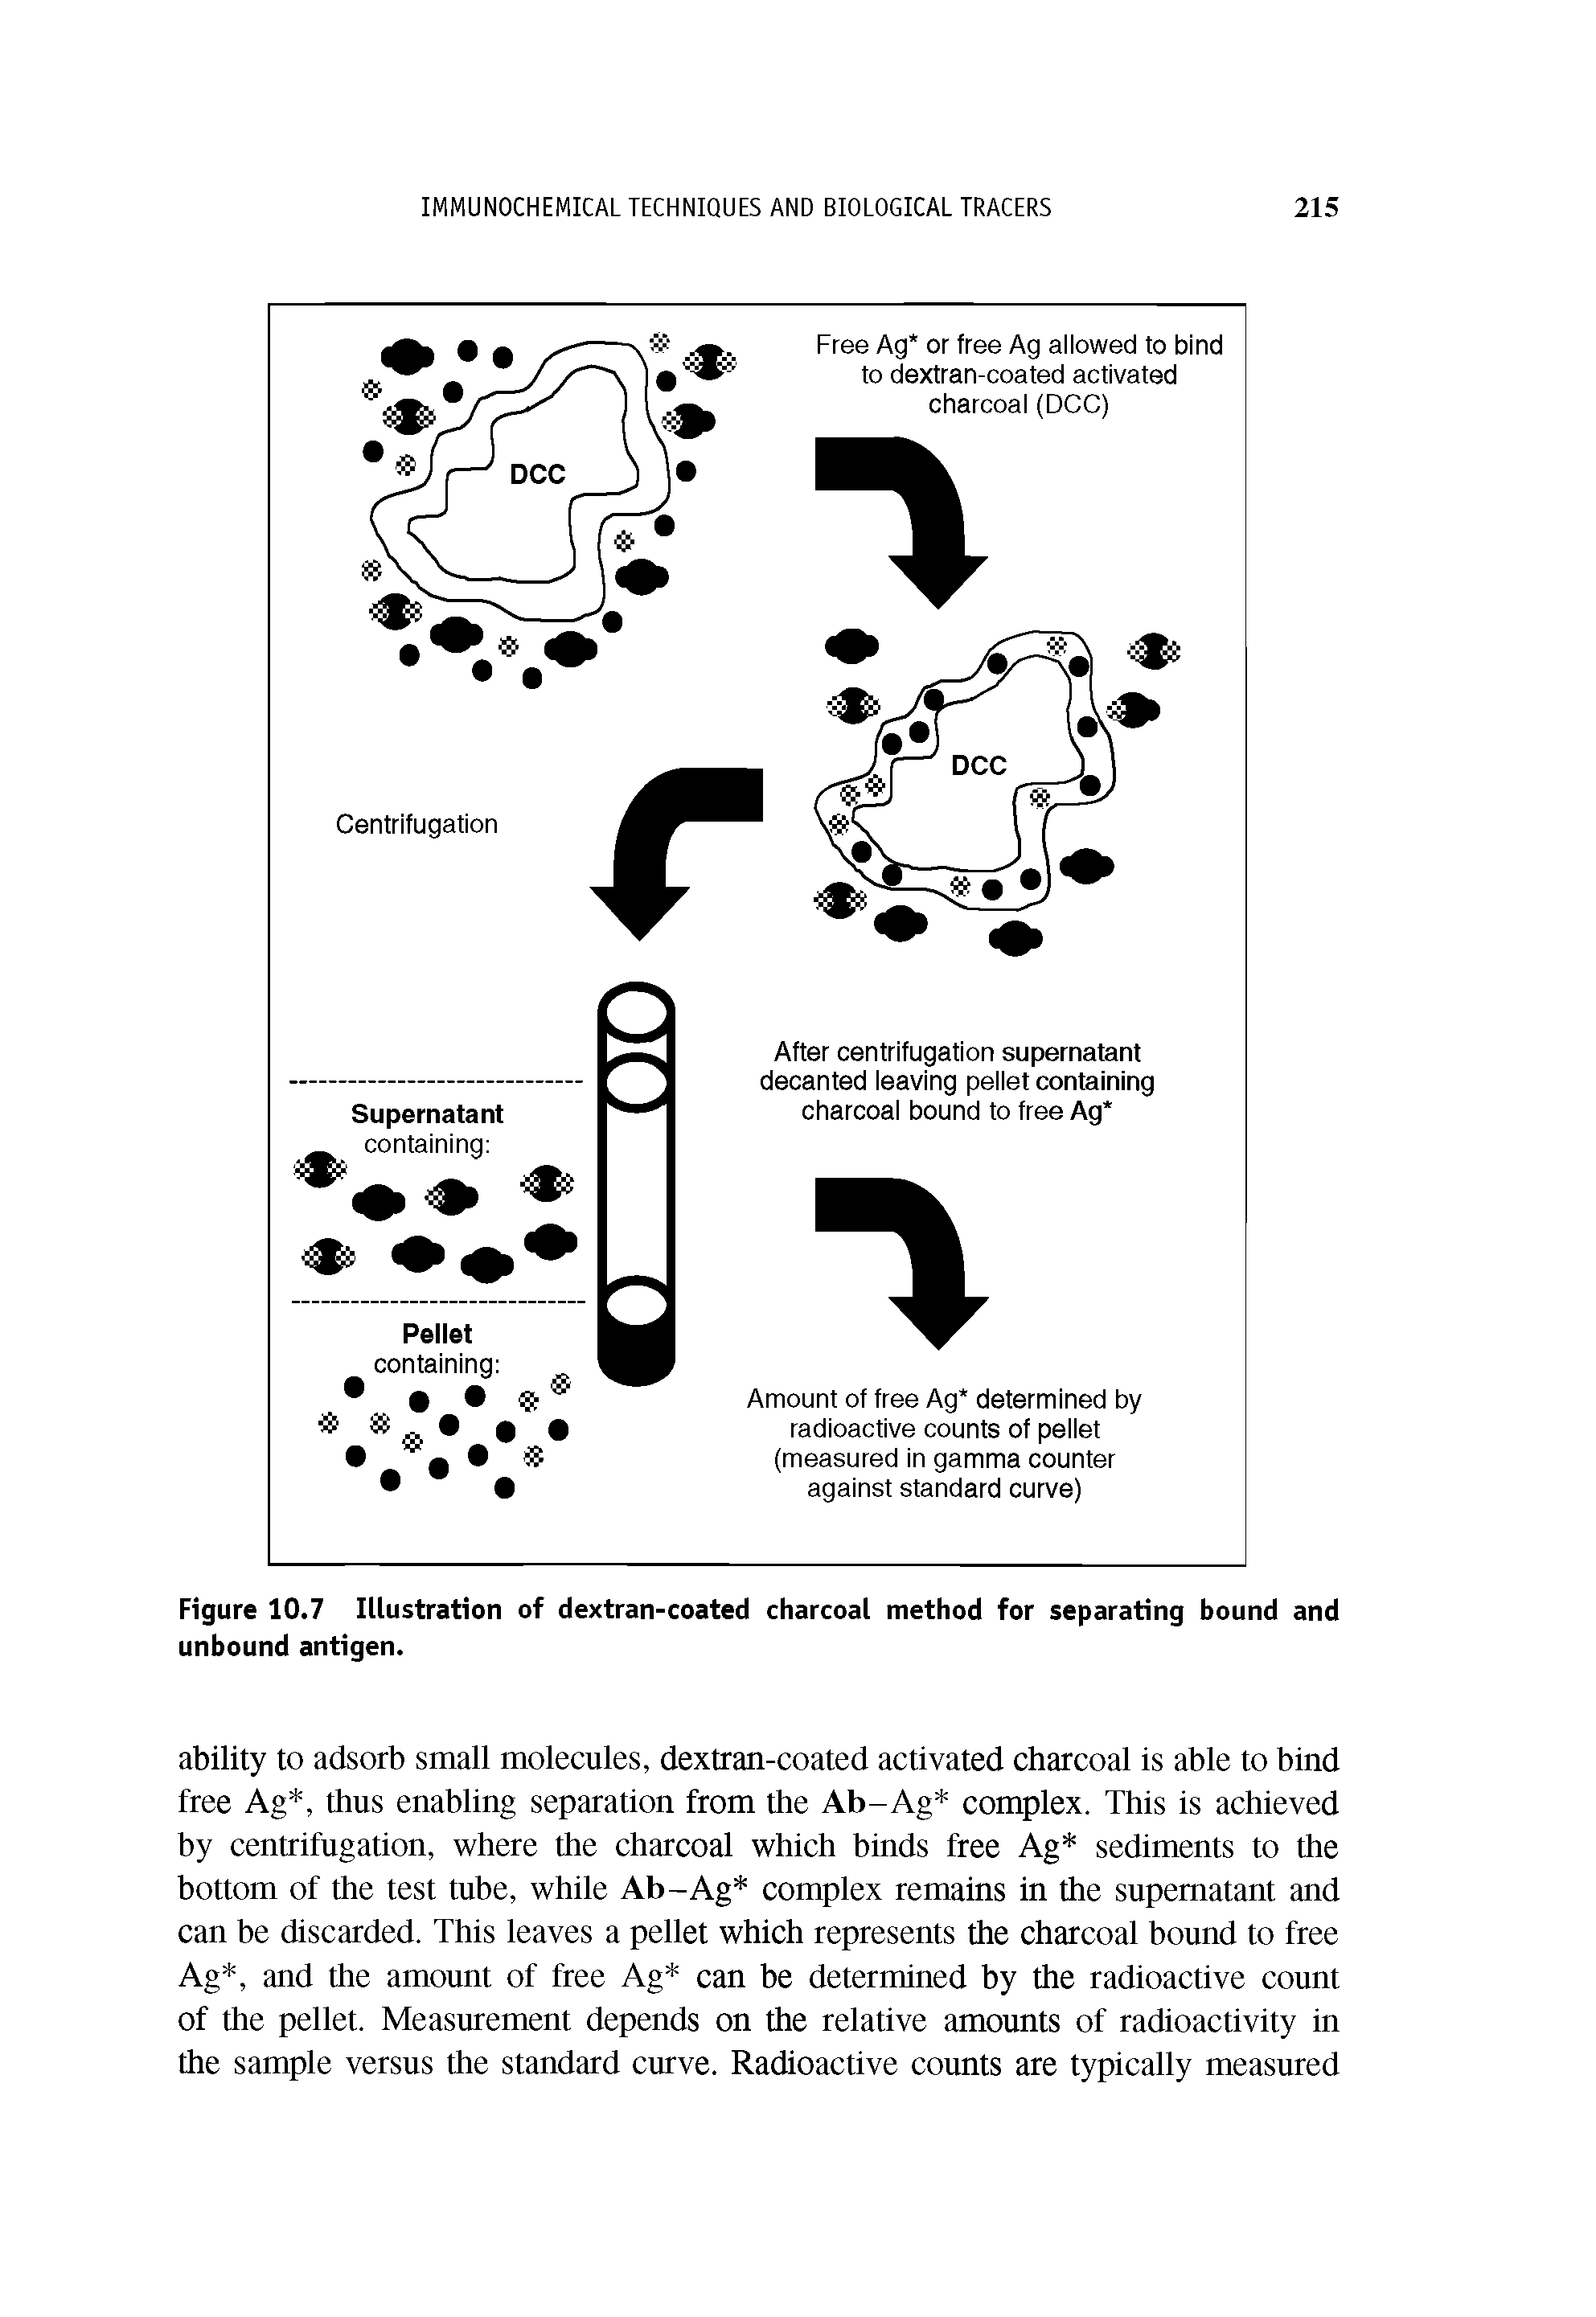 Figure 10.7 Illustration of dextran-coated charcoal method for separating bound and unbound antigen.